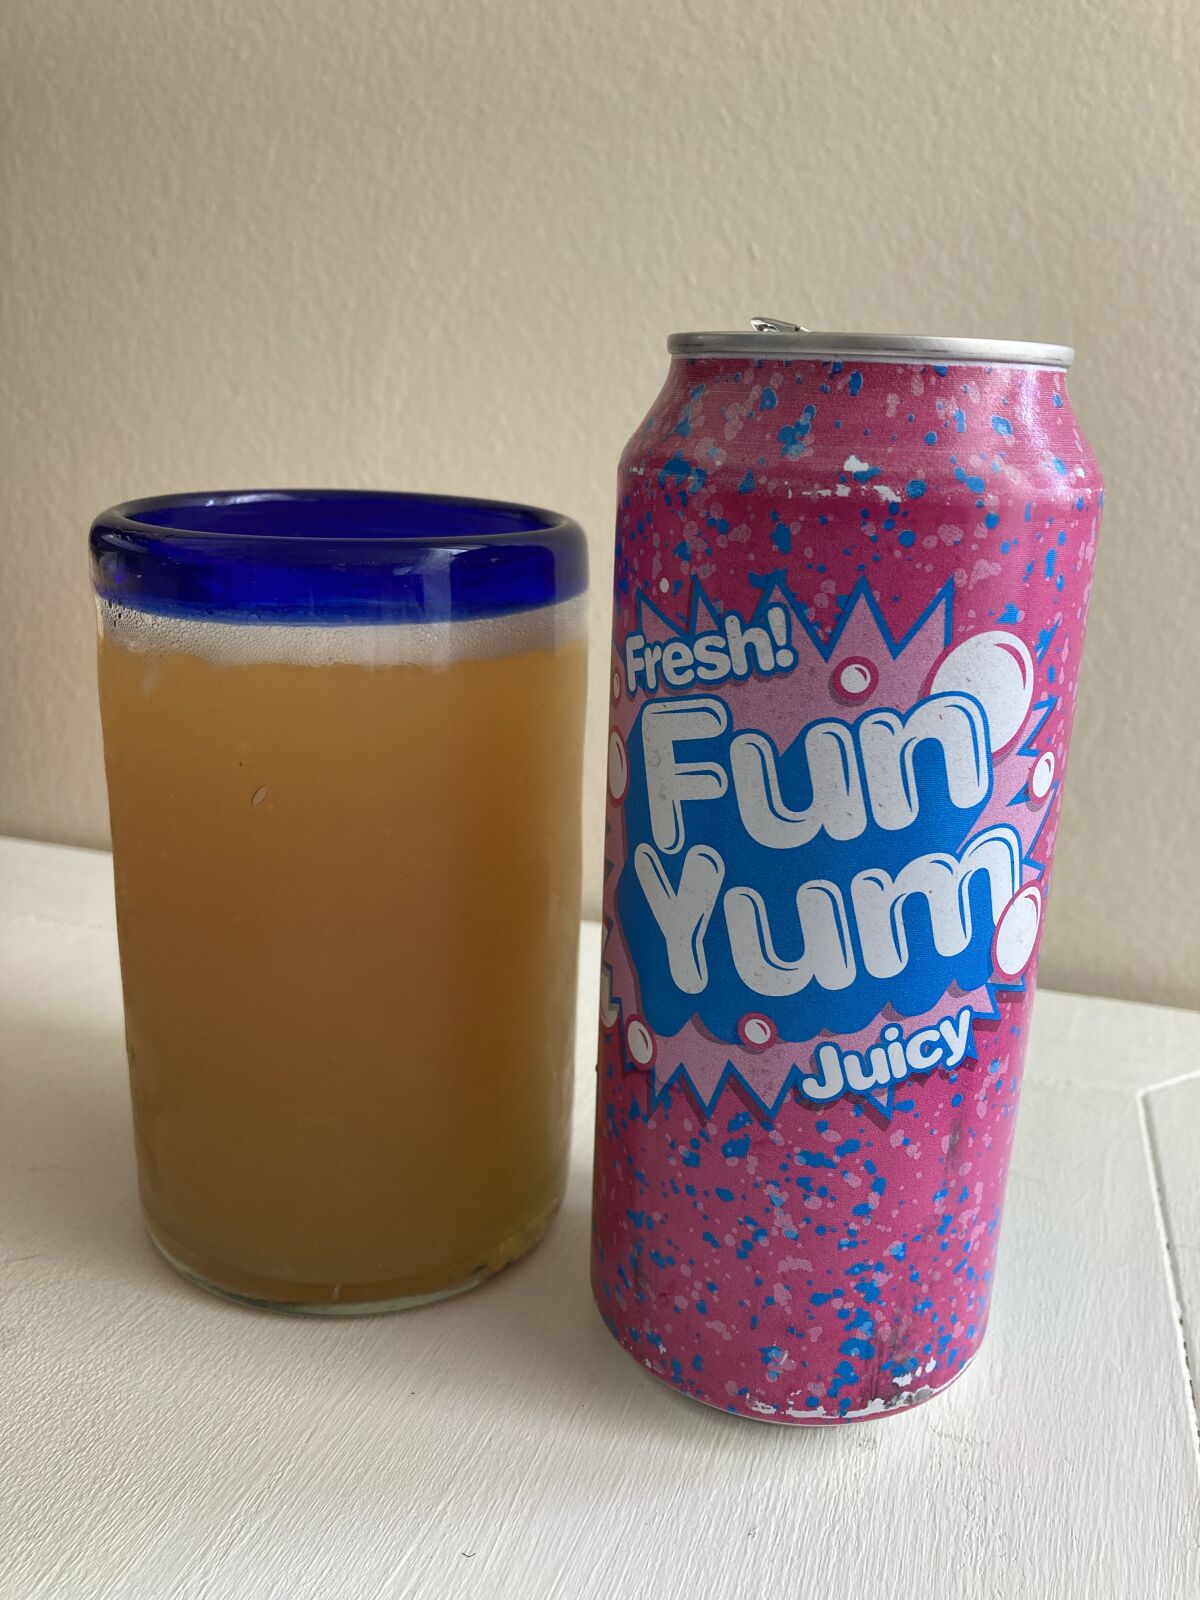 Fun Yum, an IPA from Pariah Brewing Company